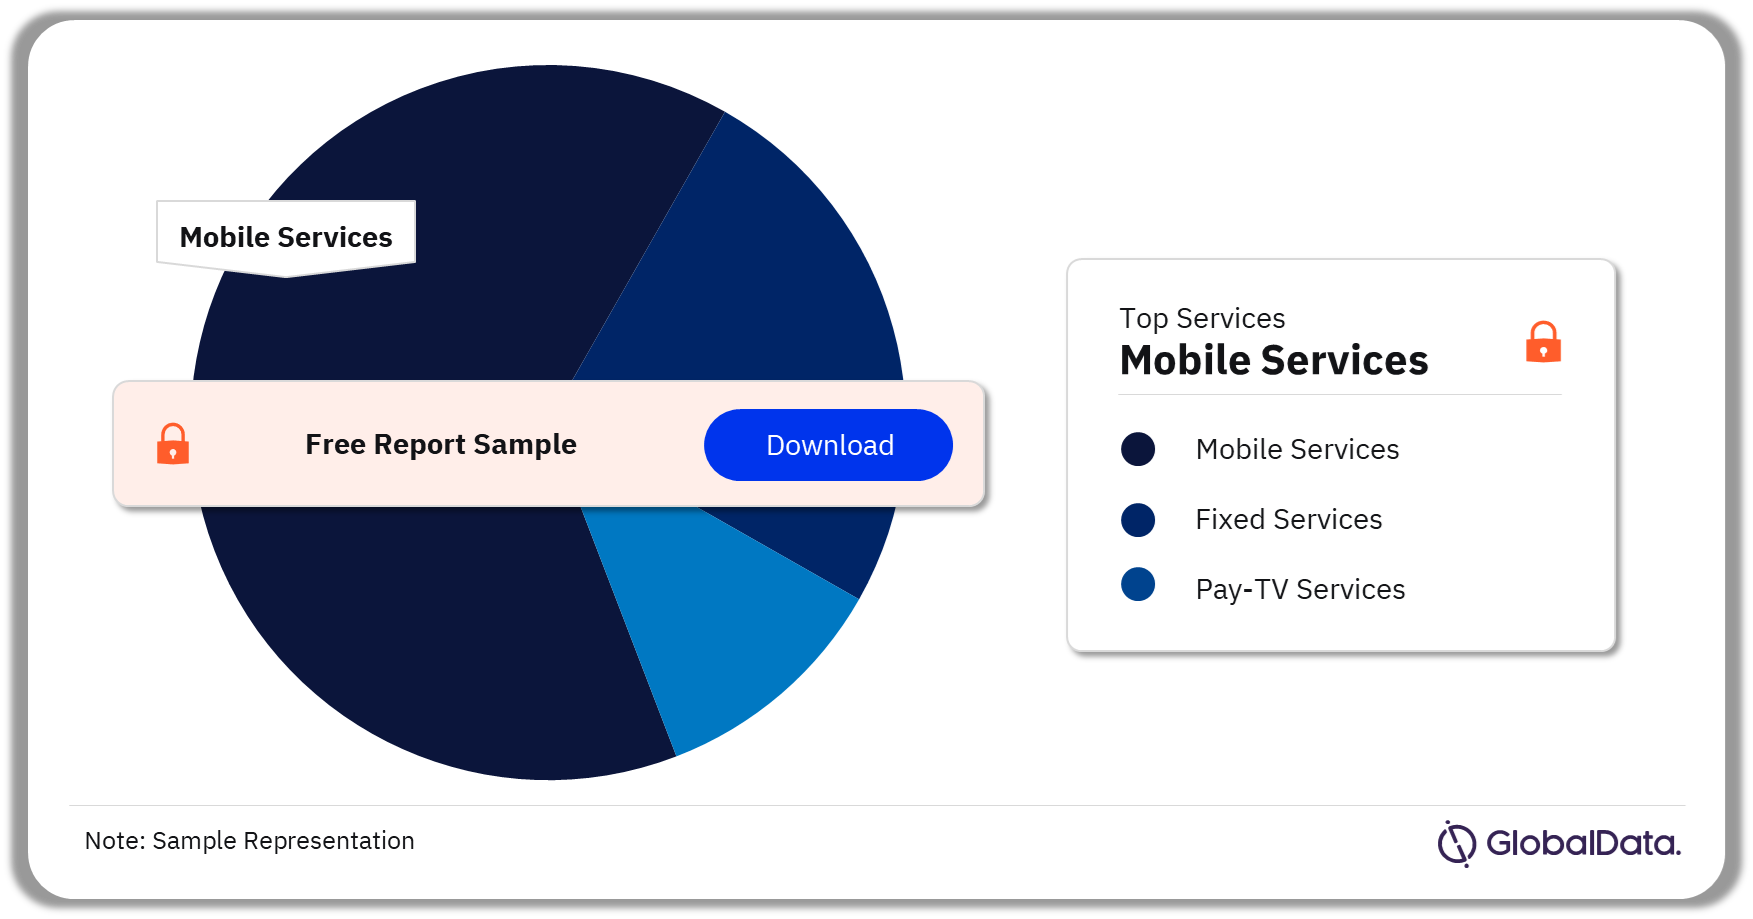 UAE Telecom Services Market Share by Service